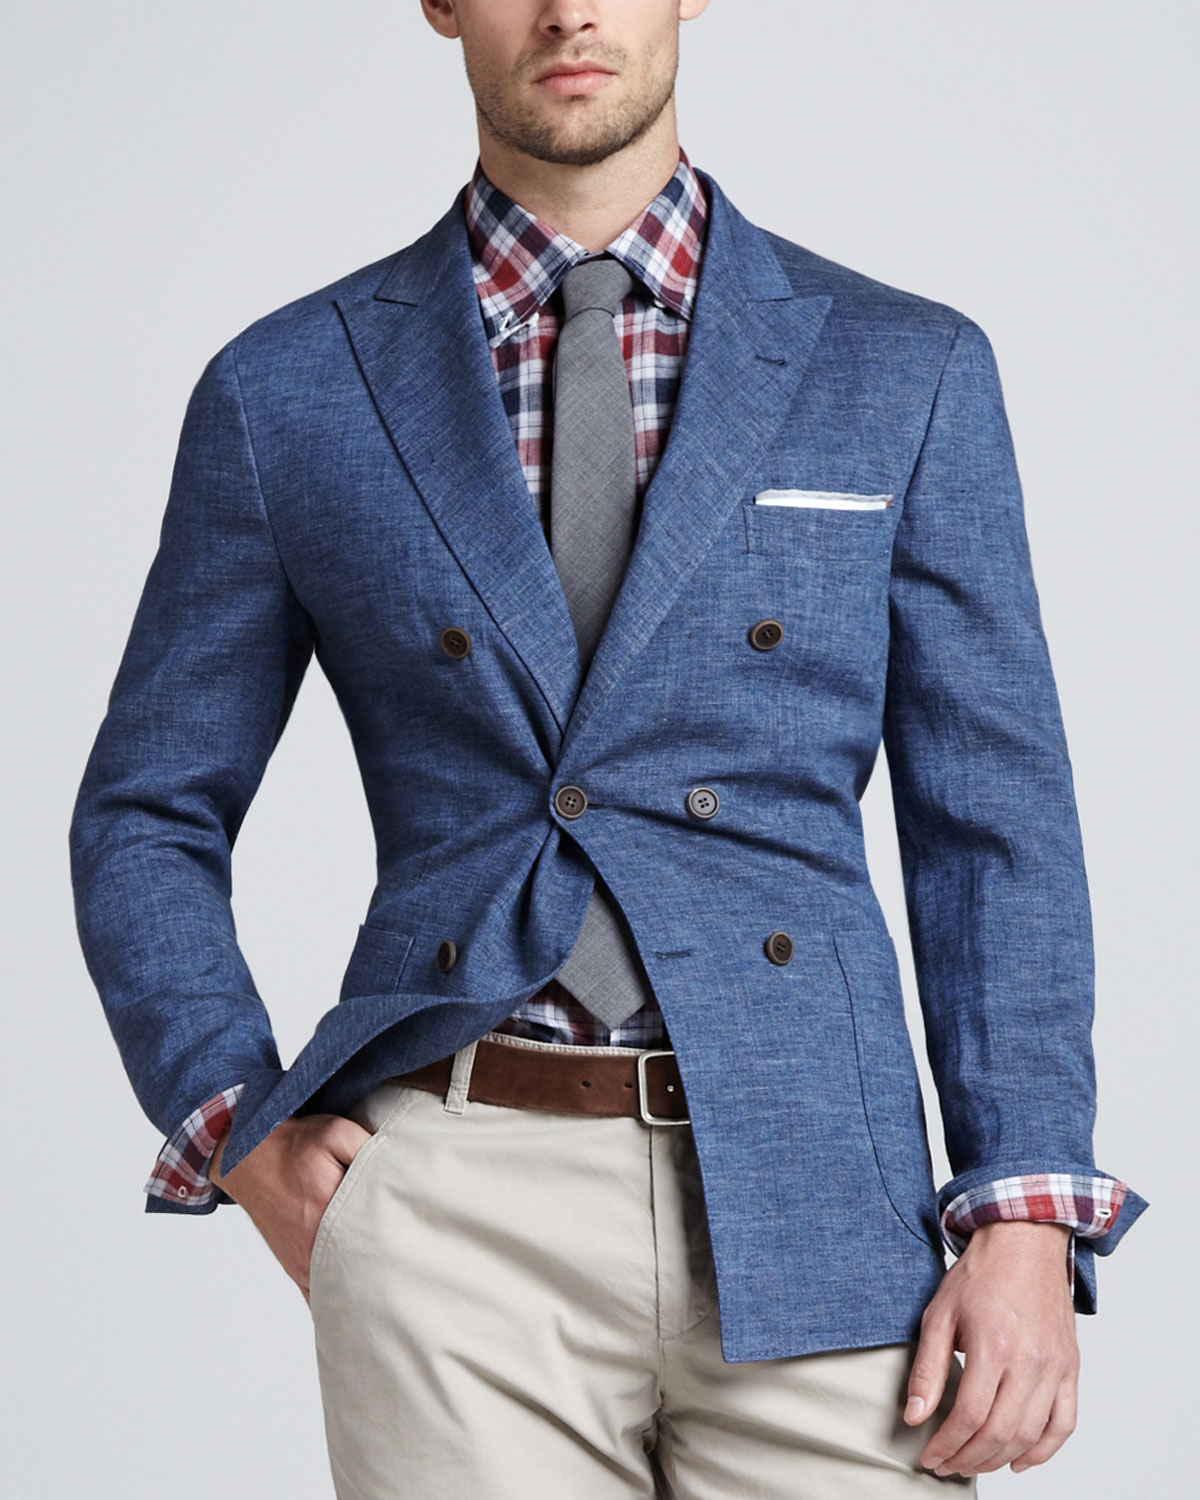 Lyst - Brunello Cucinelli Doublebreasted Linen Jacket in Blue for Men